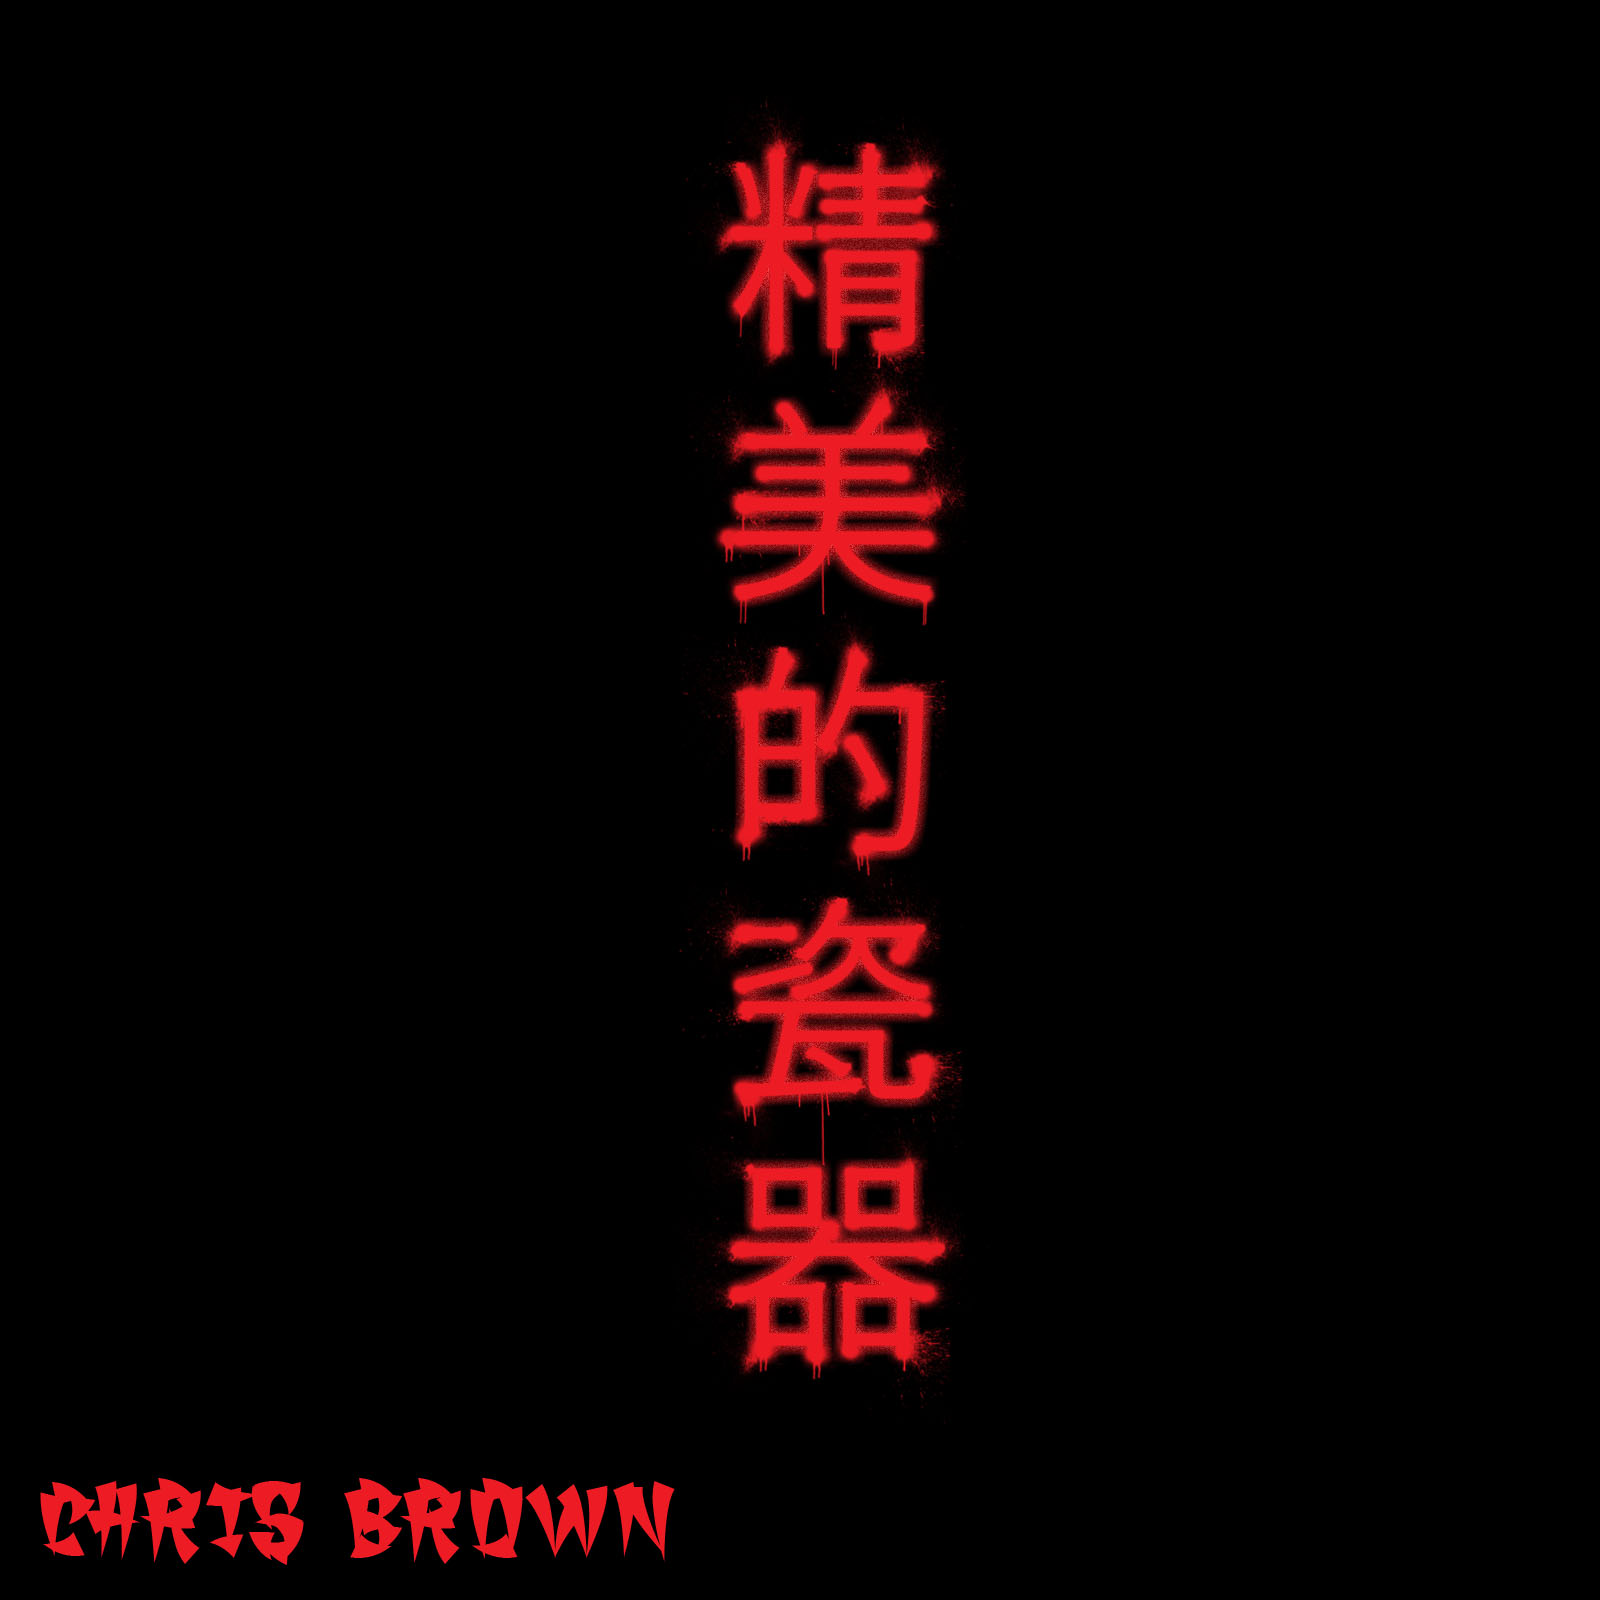 http://3.bp.blogspot.com/-qb60iFiFJYY/UVvnHcJltwI/AAAAAAAAAUs/UIqSkpXs7NI/s1600/Chris+Brown+-+Fine+China.jpg